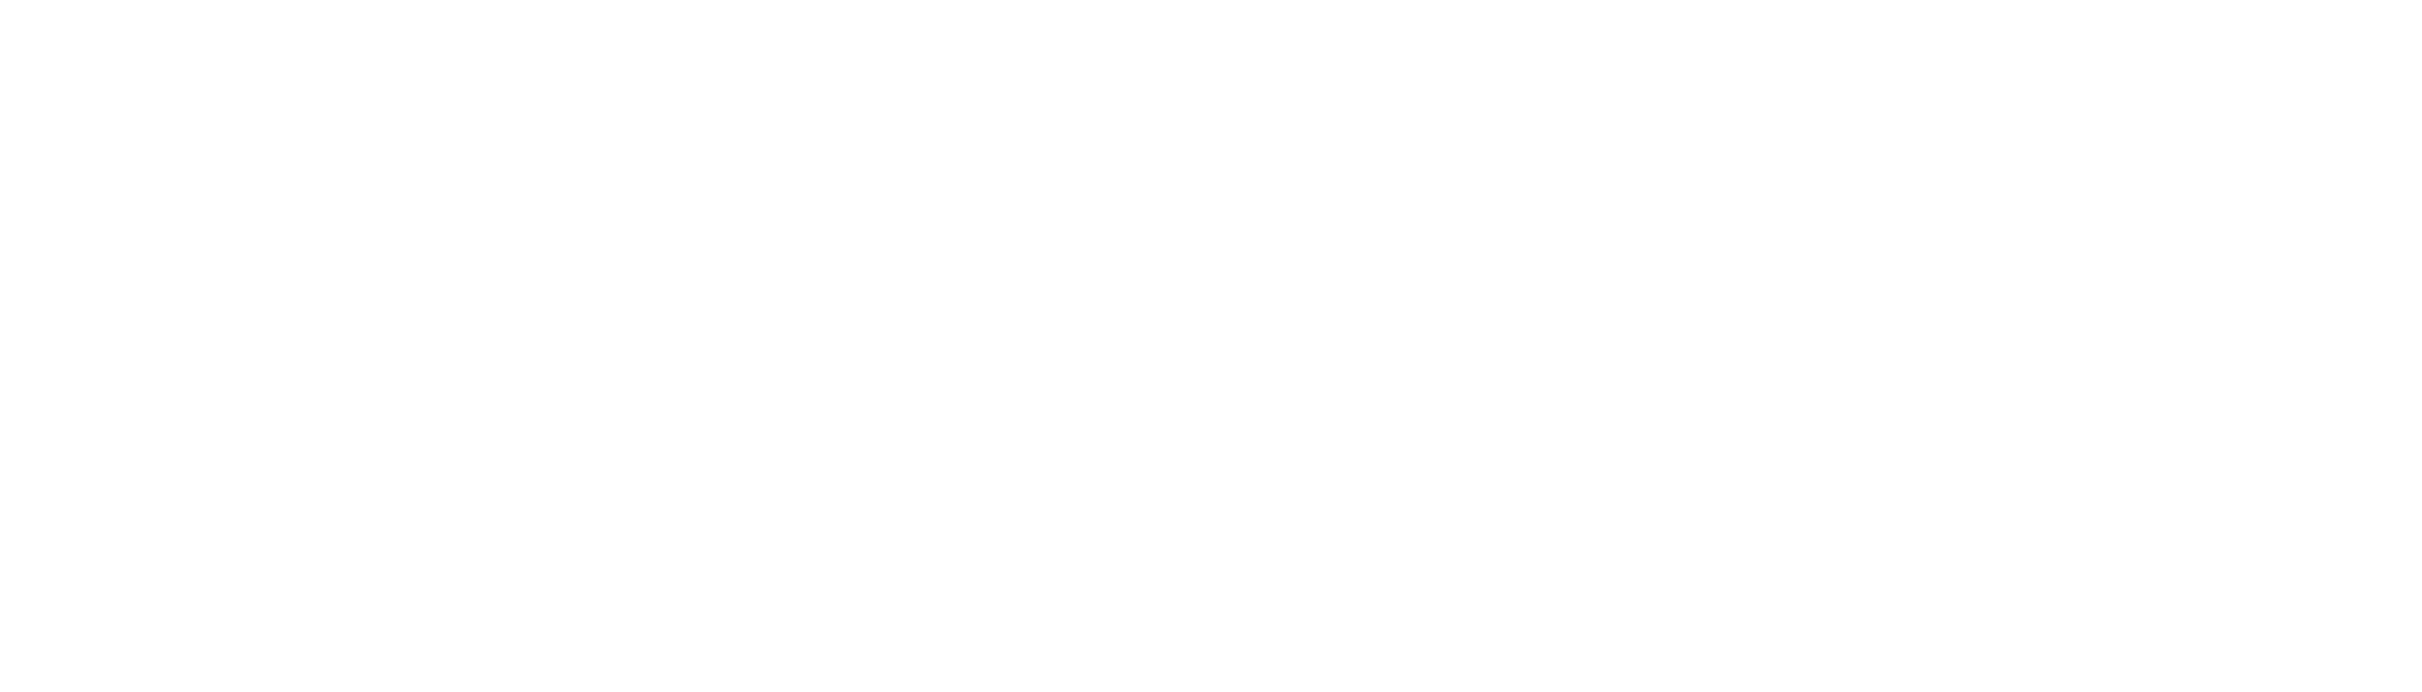 Kelsen Logo White Transparent